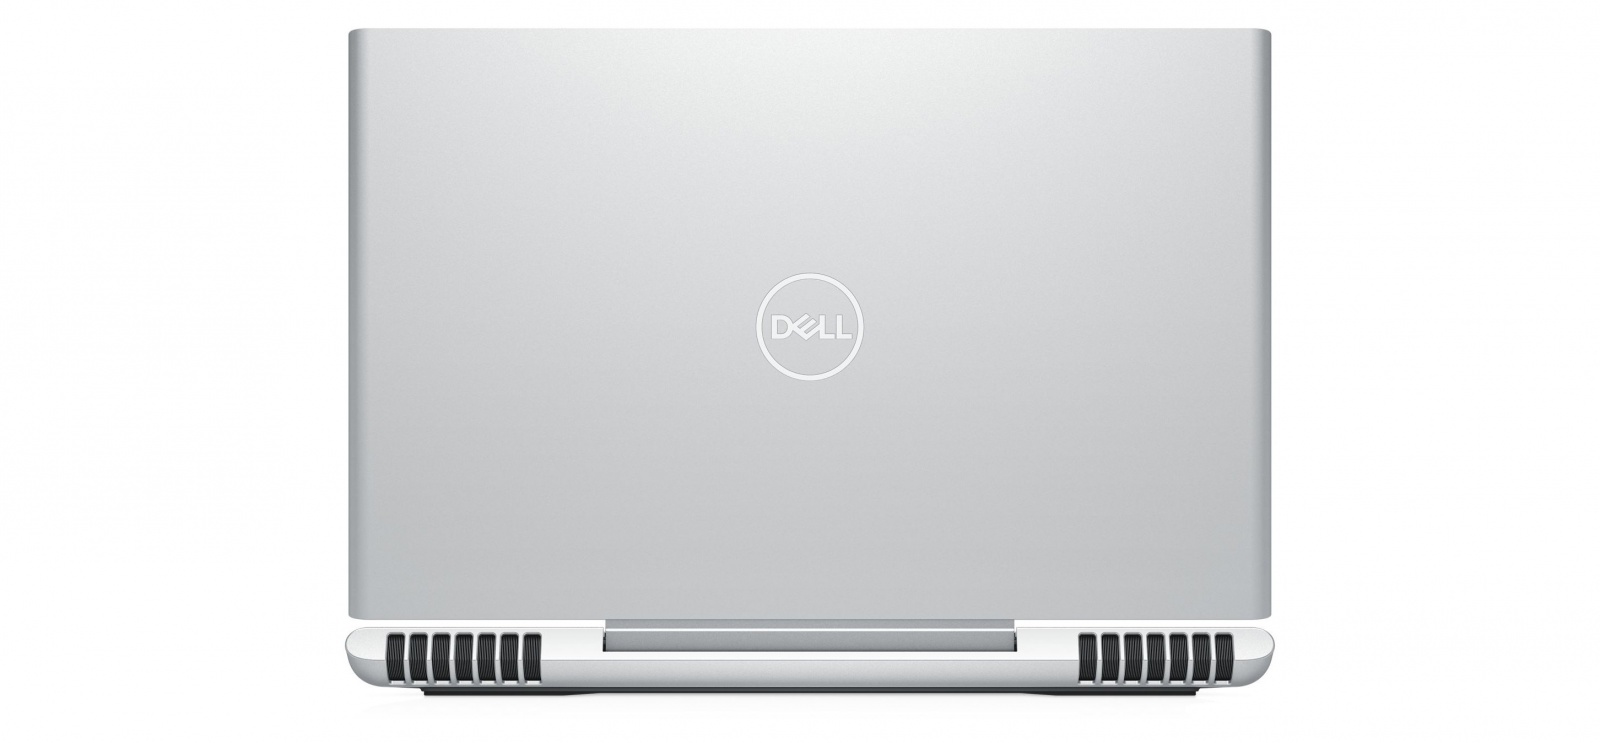 купить ноутбук Dell Vostro 15 7570 в интернет магазине beltexno.by